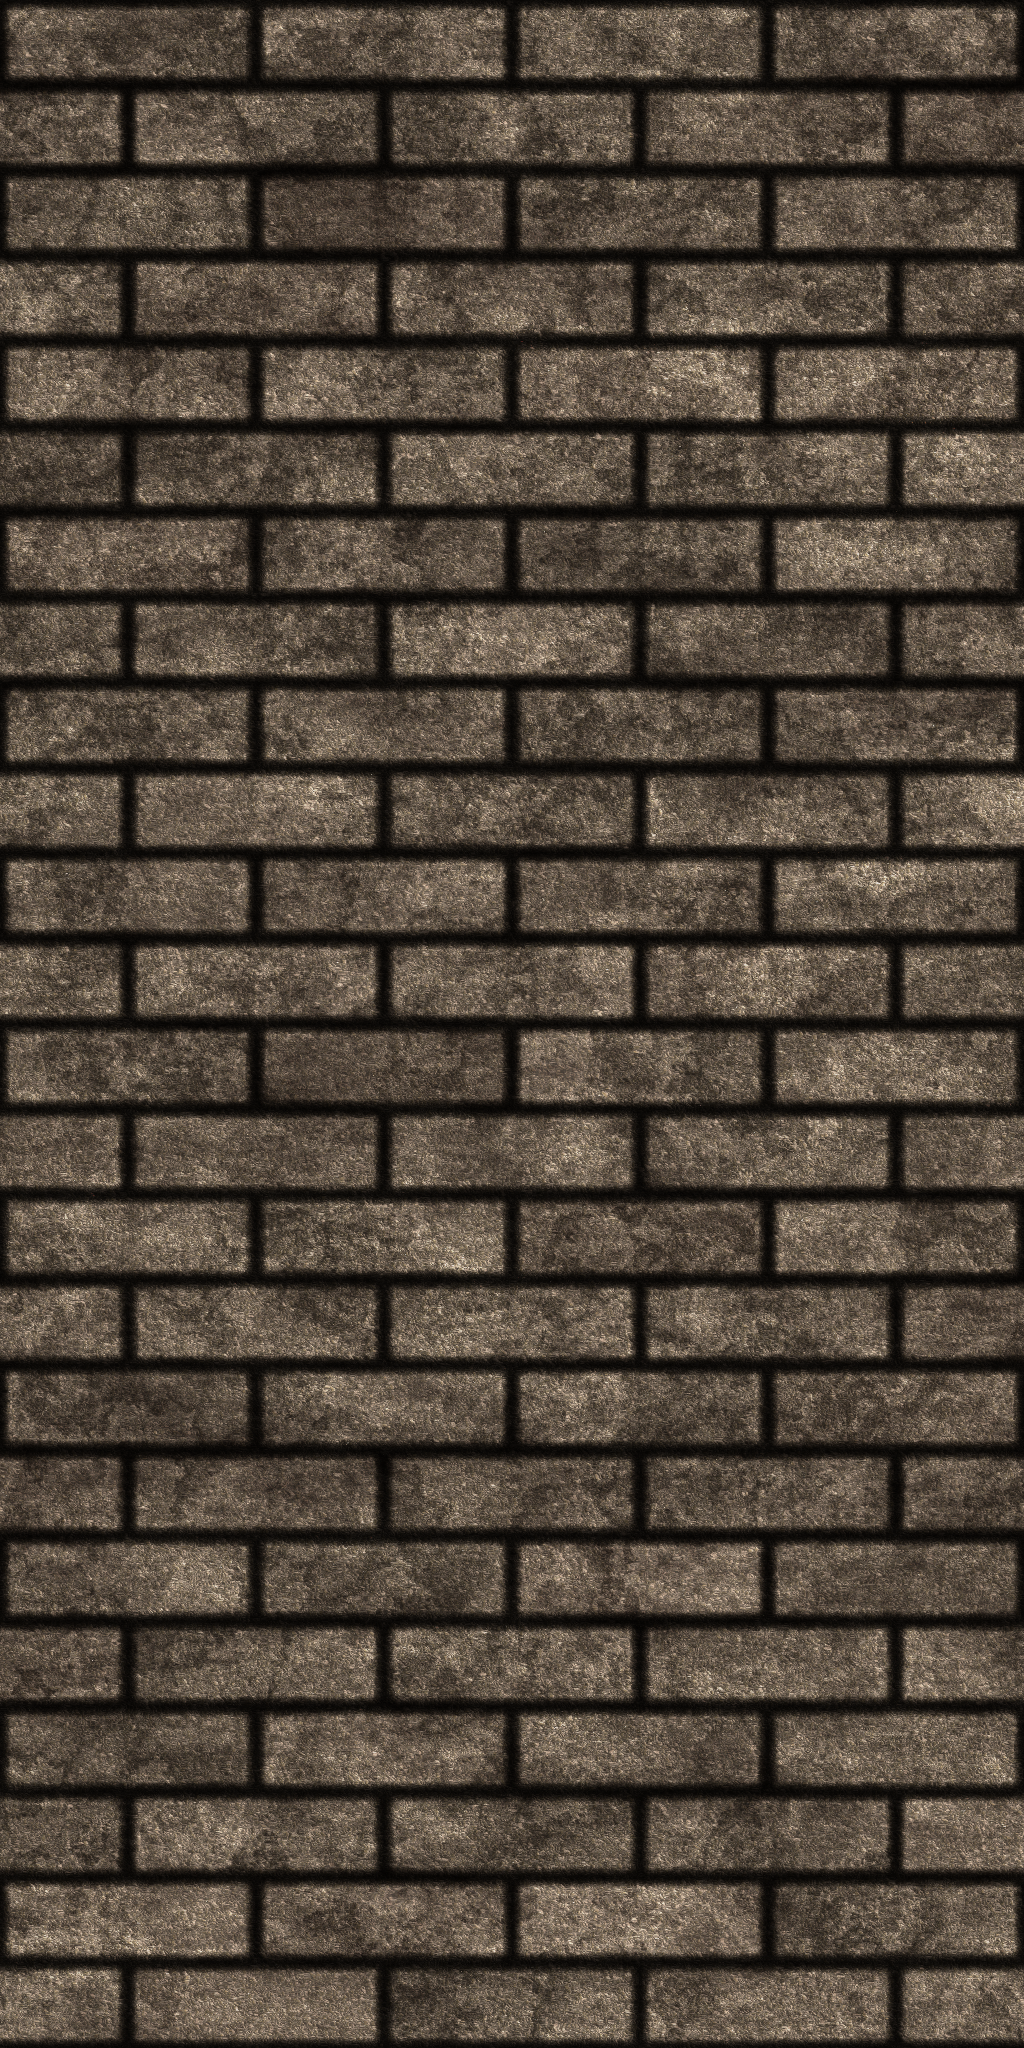 Small Brown Bricks 01